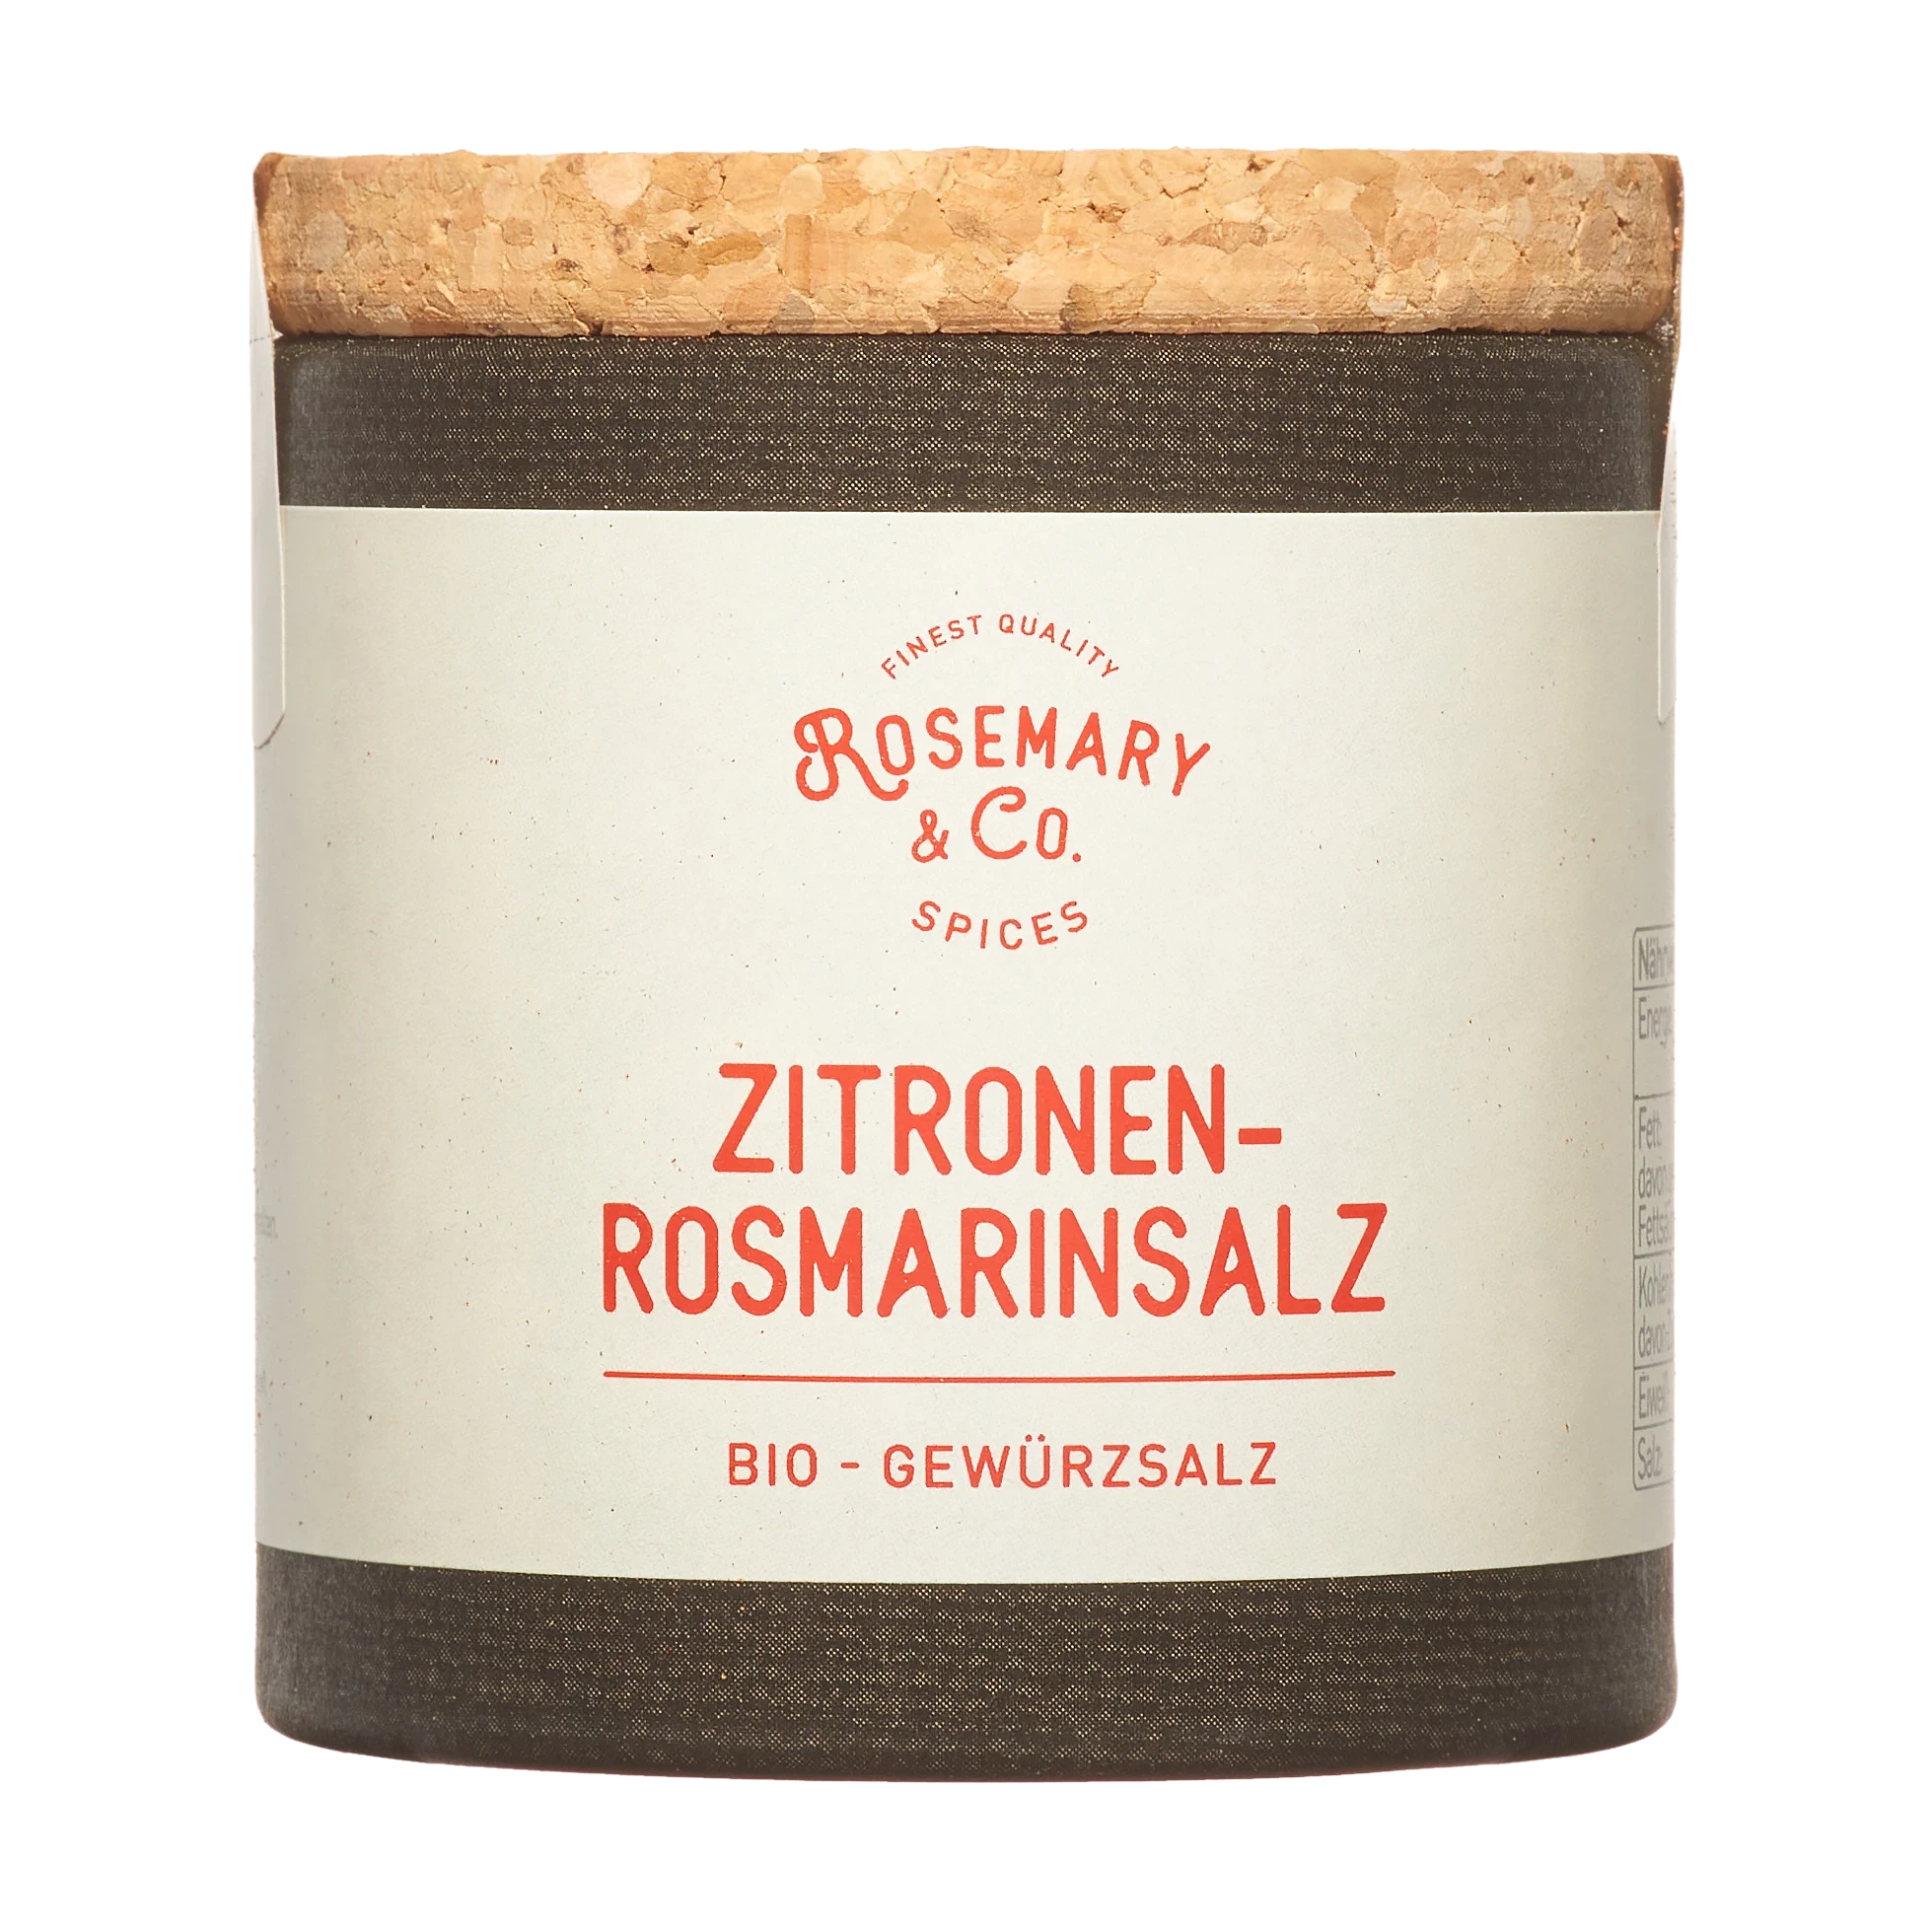 Rosemary & Co. Zitronen-Rosmarinsalz 